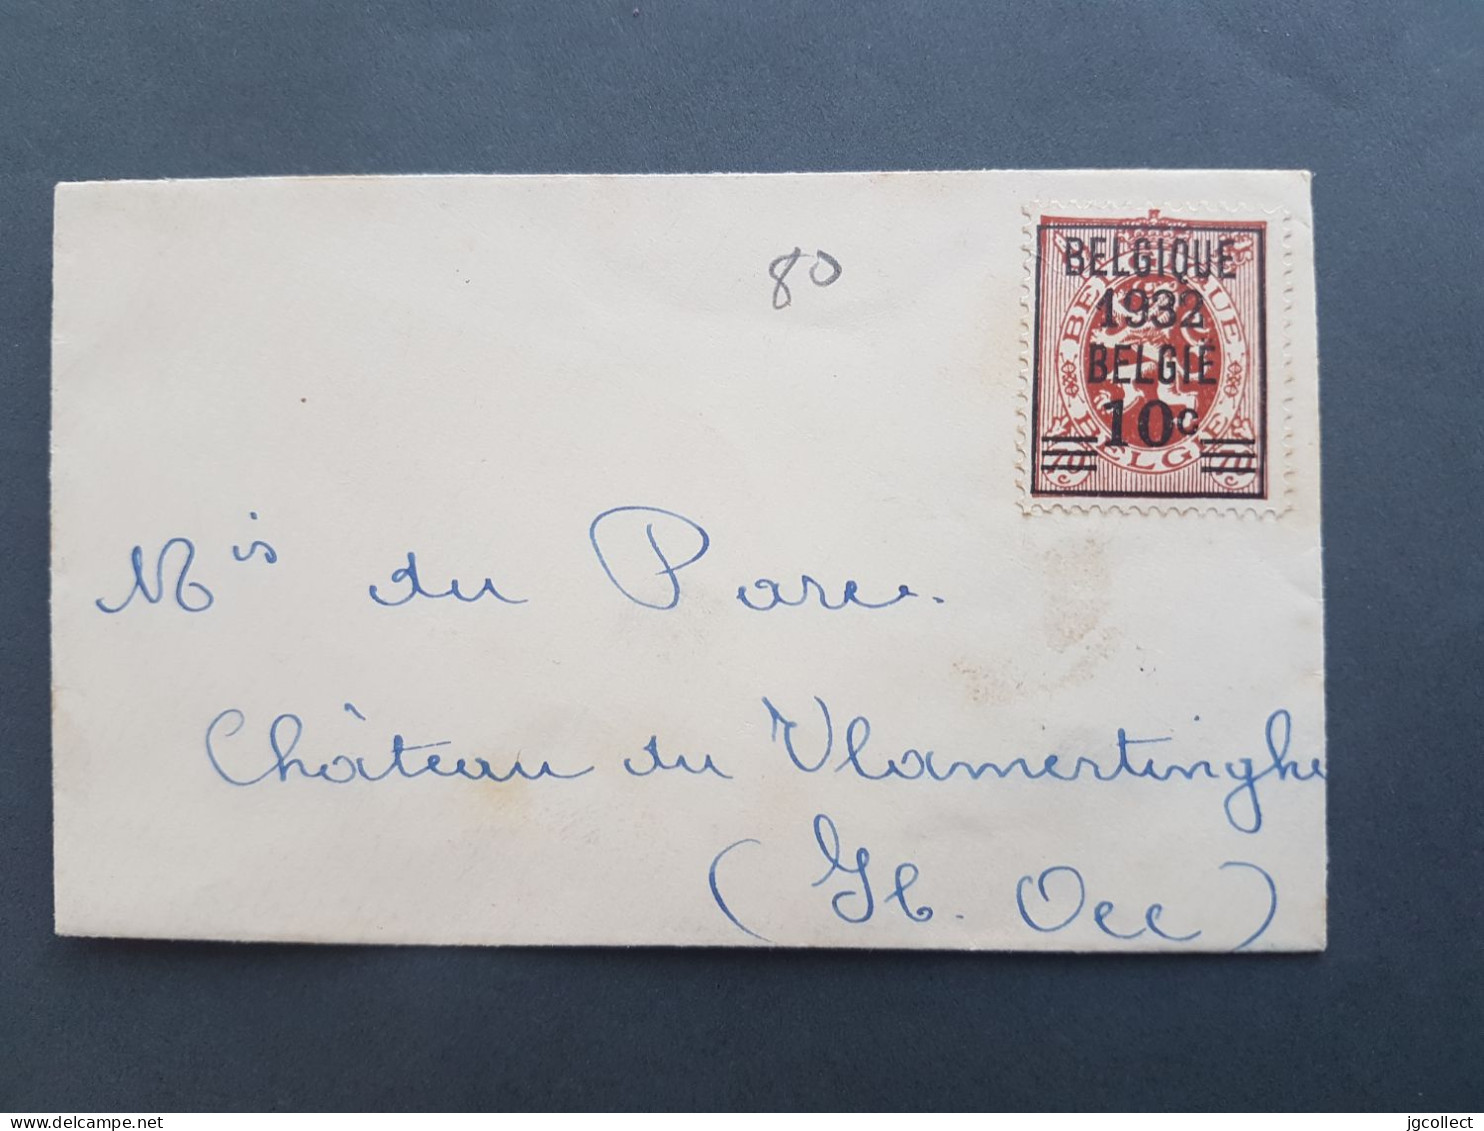 Obp/cob 334 (Belgique 1932 België) Kleine Enveloppe - Typo Precancels 1936-51 (Small Seal Of The State)